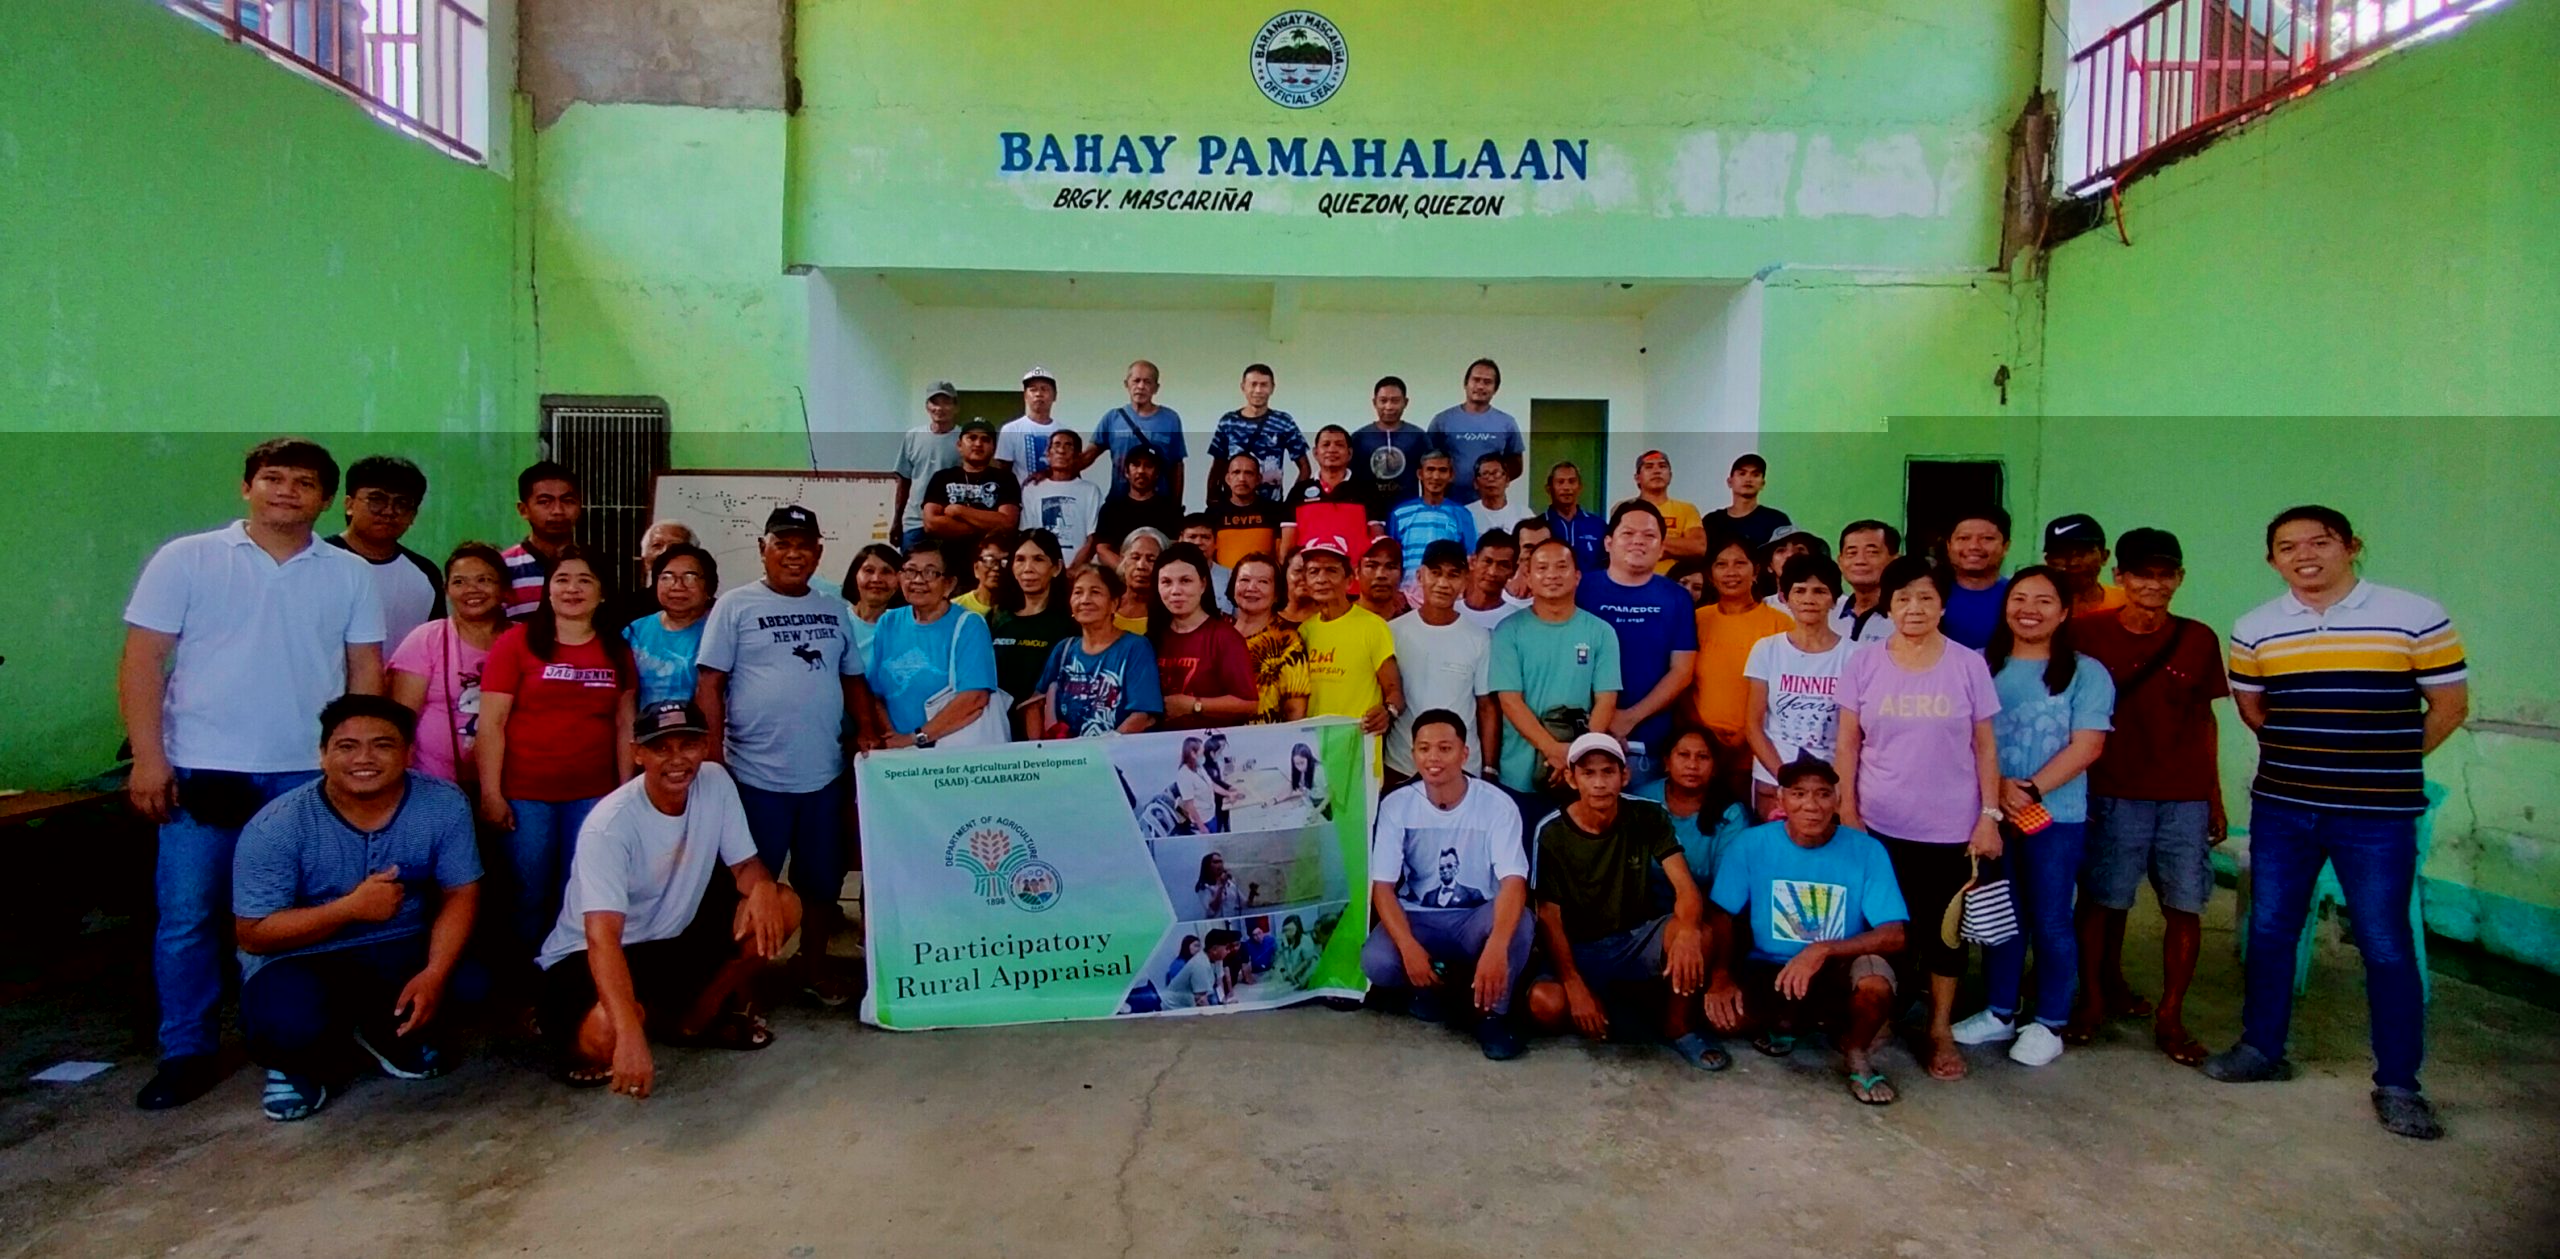 251 farmers in Quezon Province underwent PRA